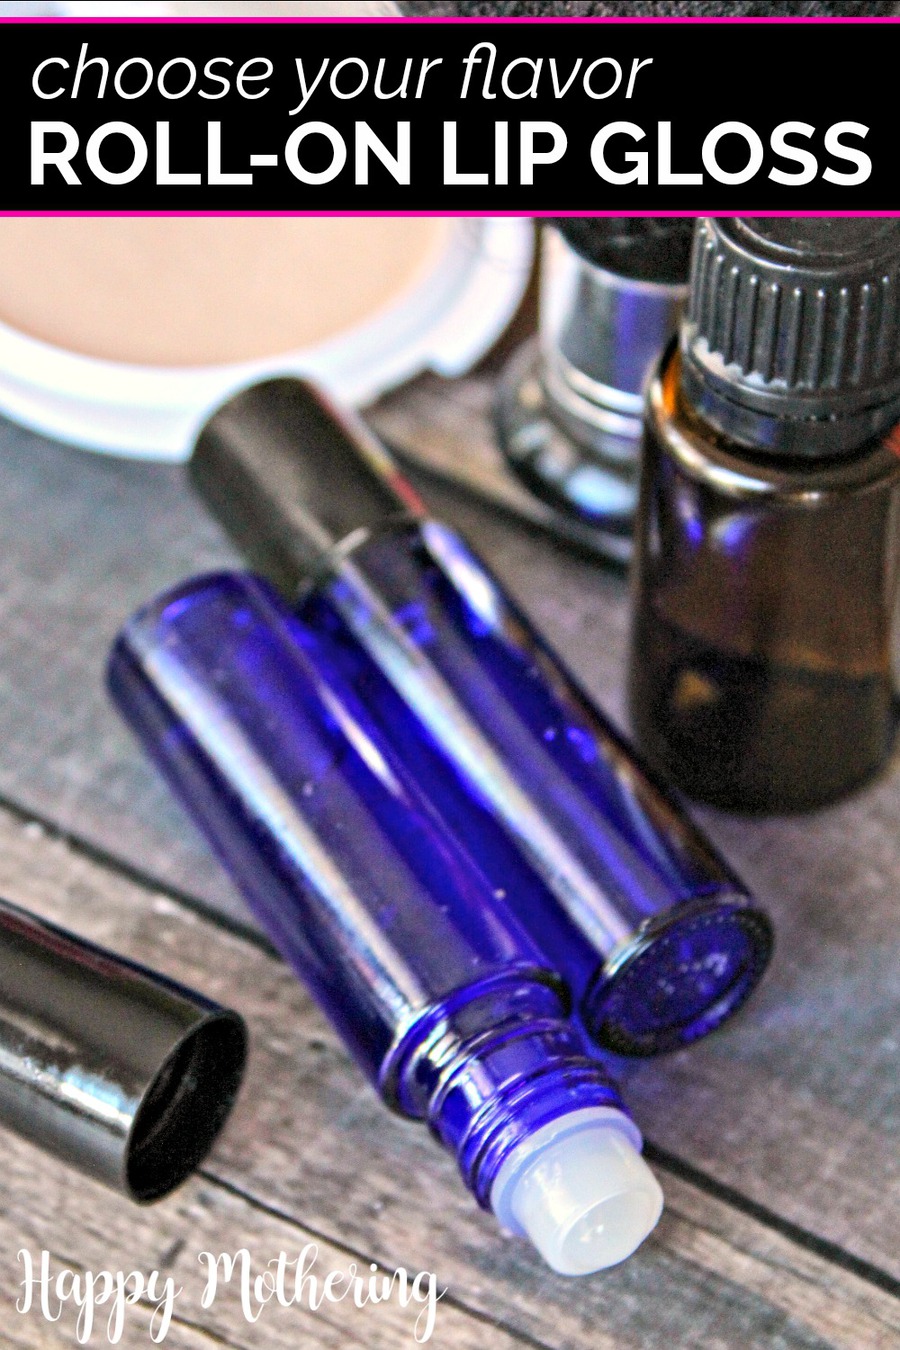 Two blue bottles of roll-on lip gloss